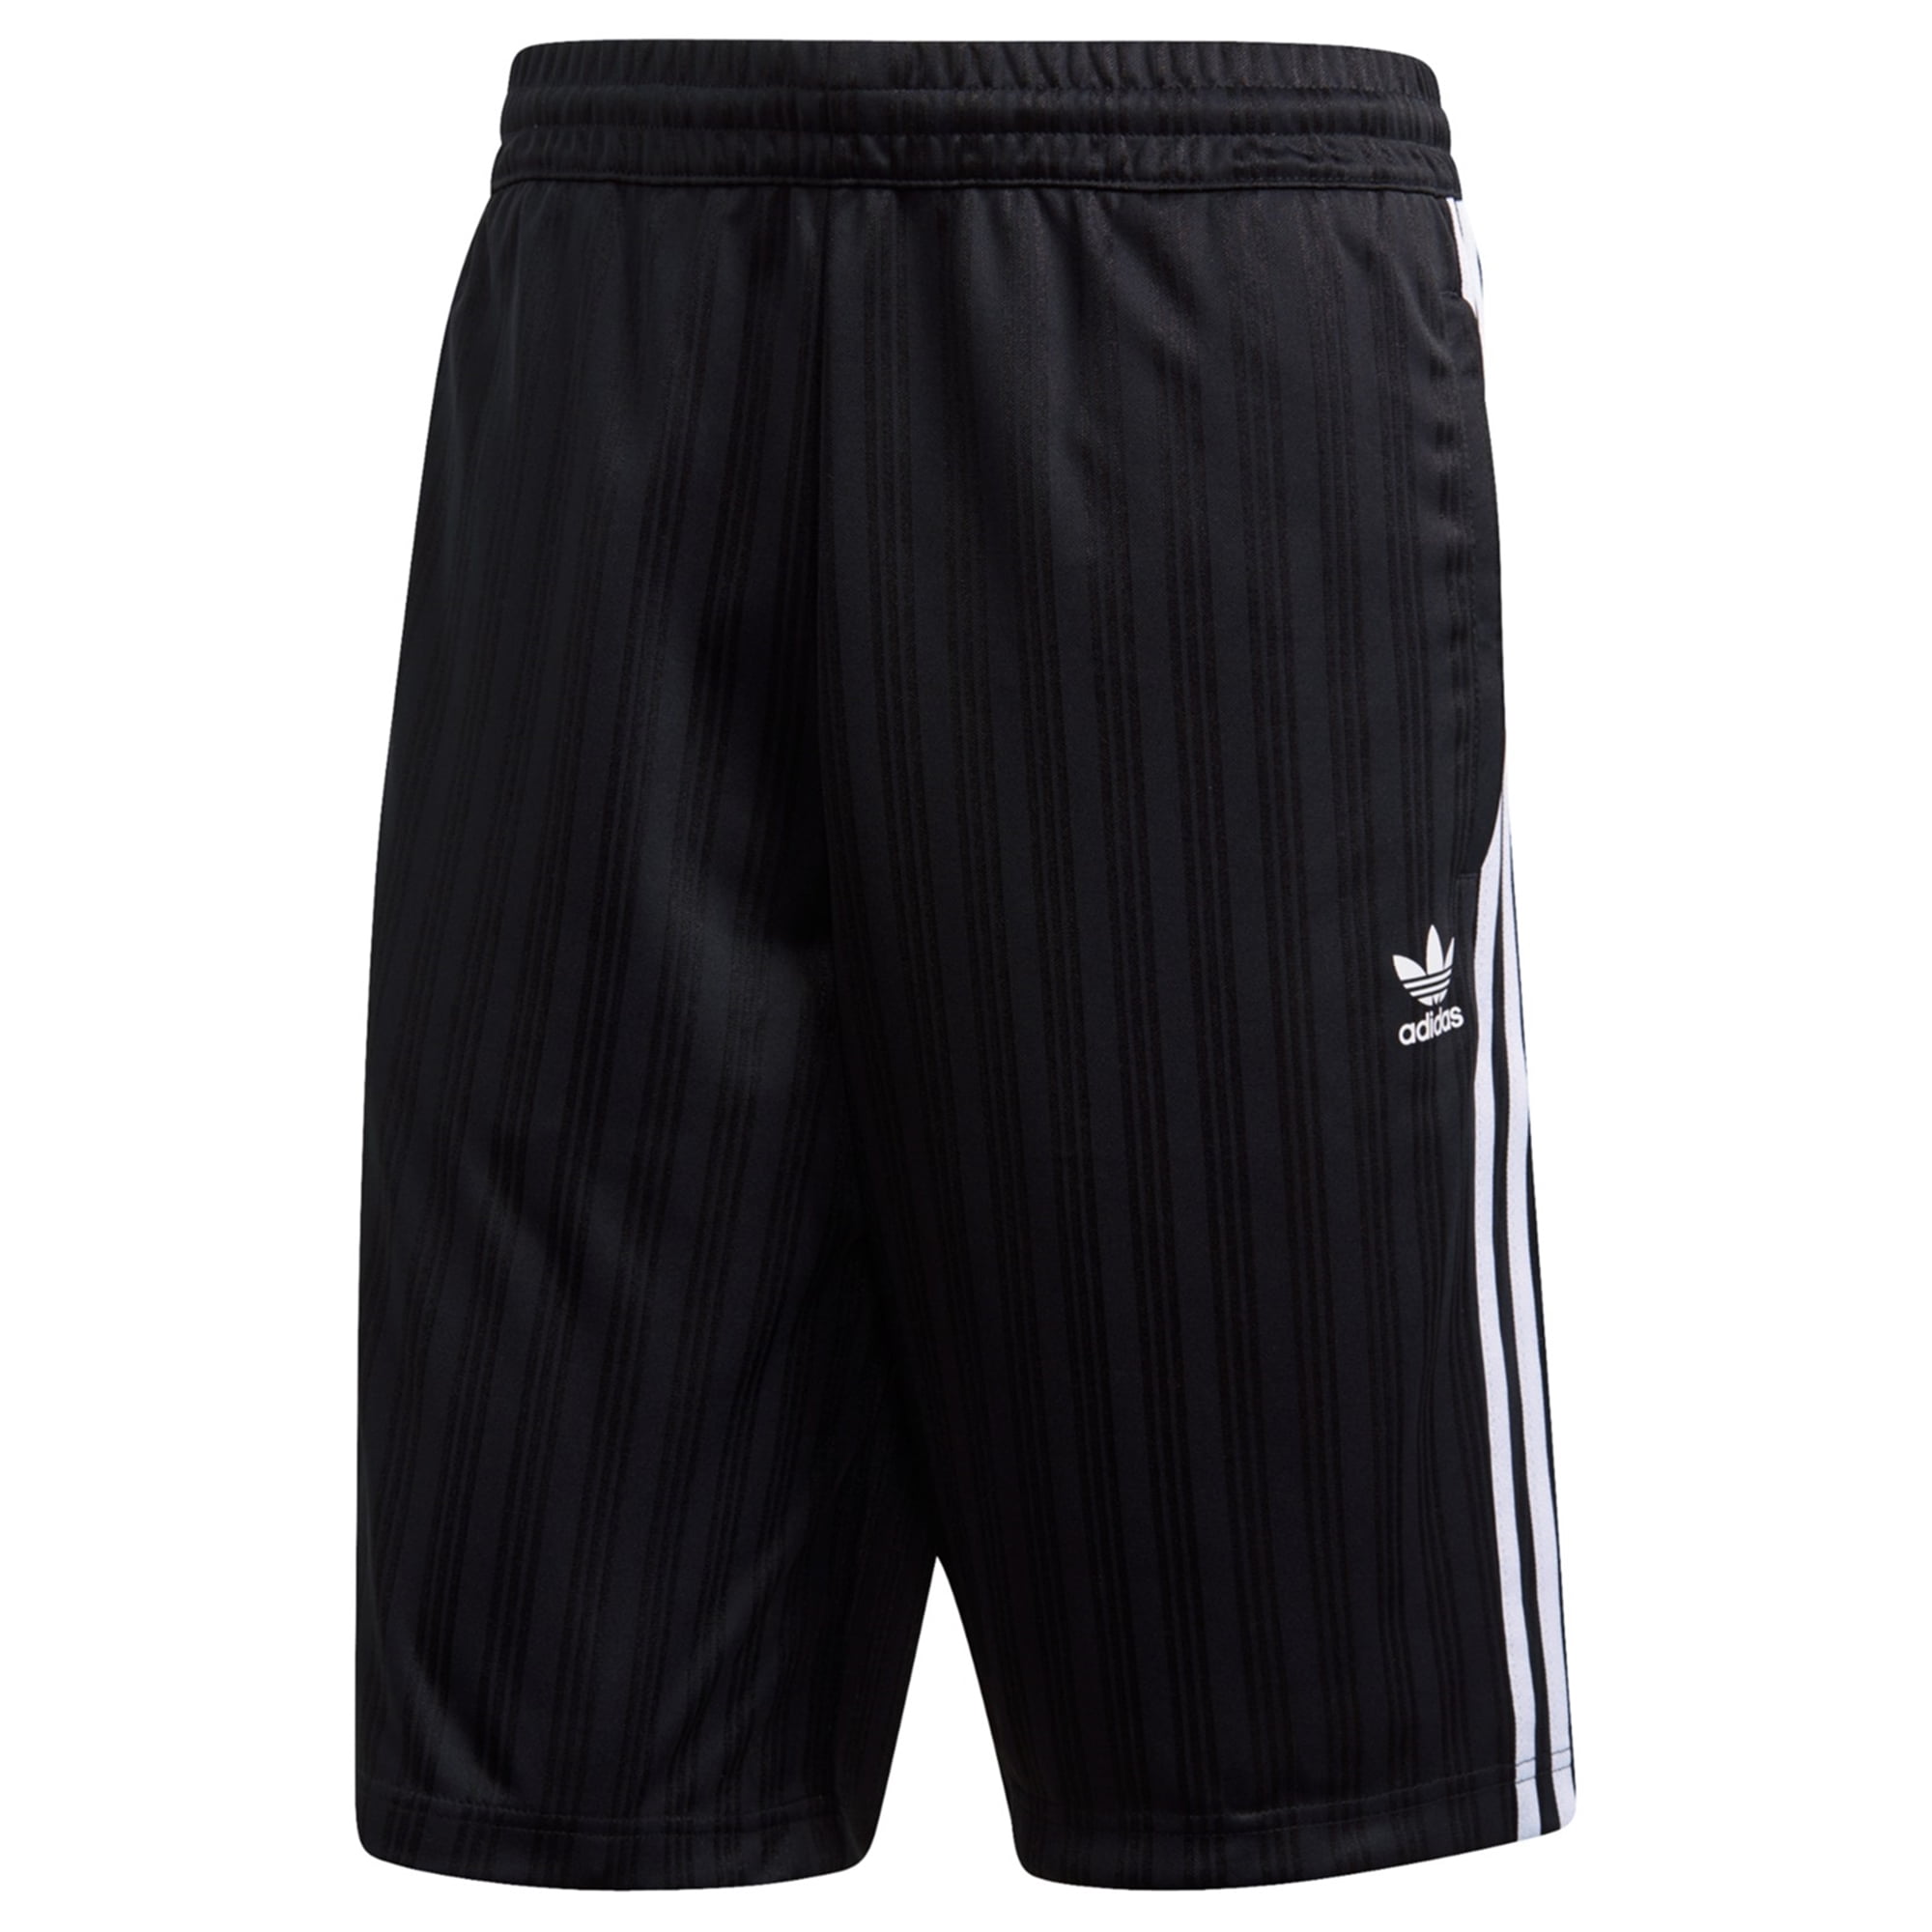 Adidas - Adidas Mens Football Athletic Workout Shorts, Black, Large ...